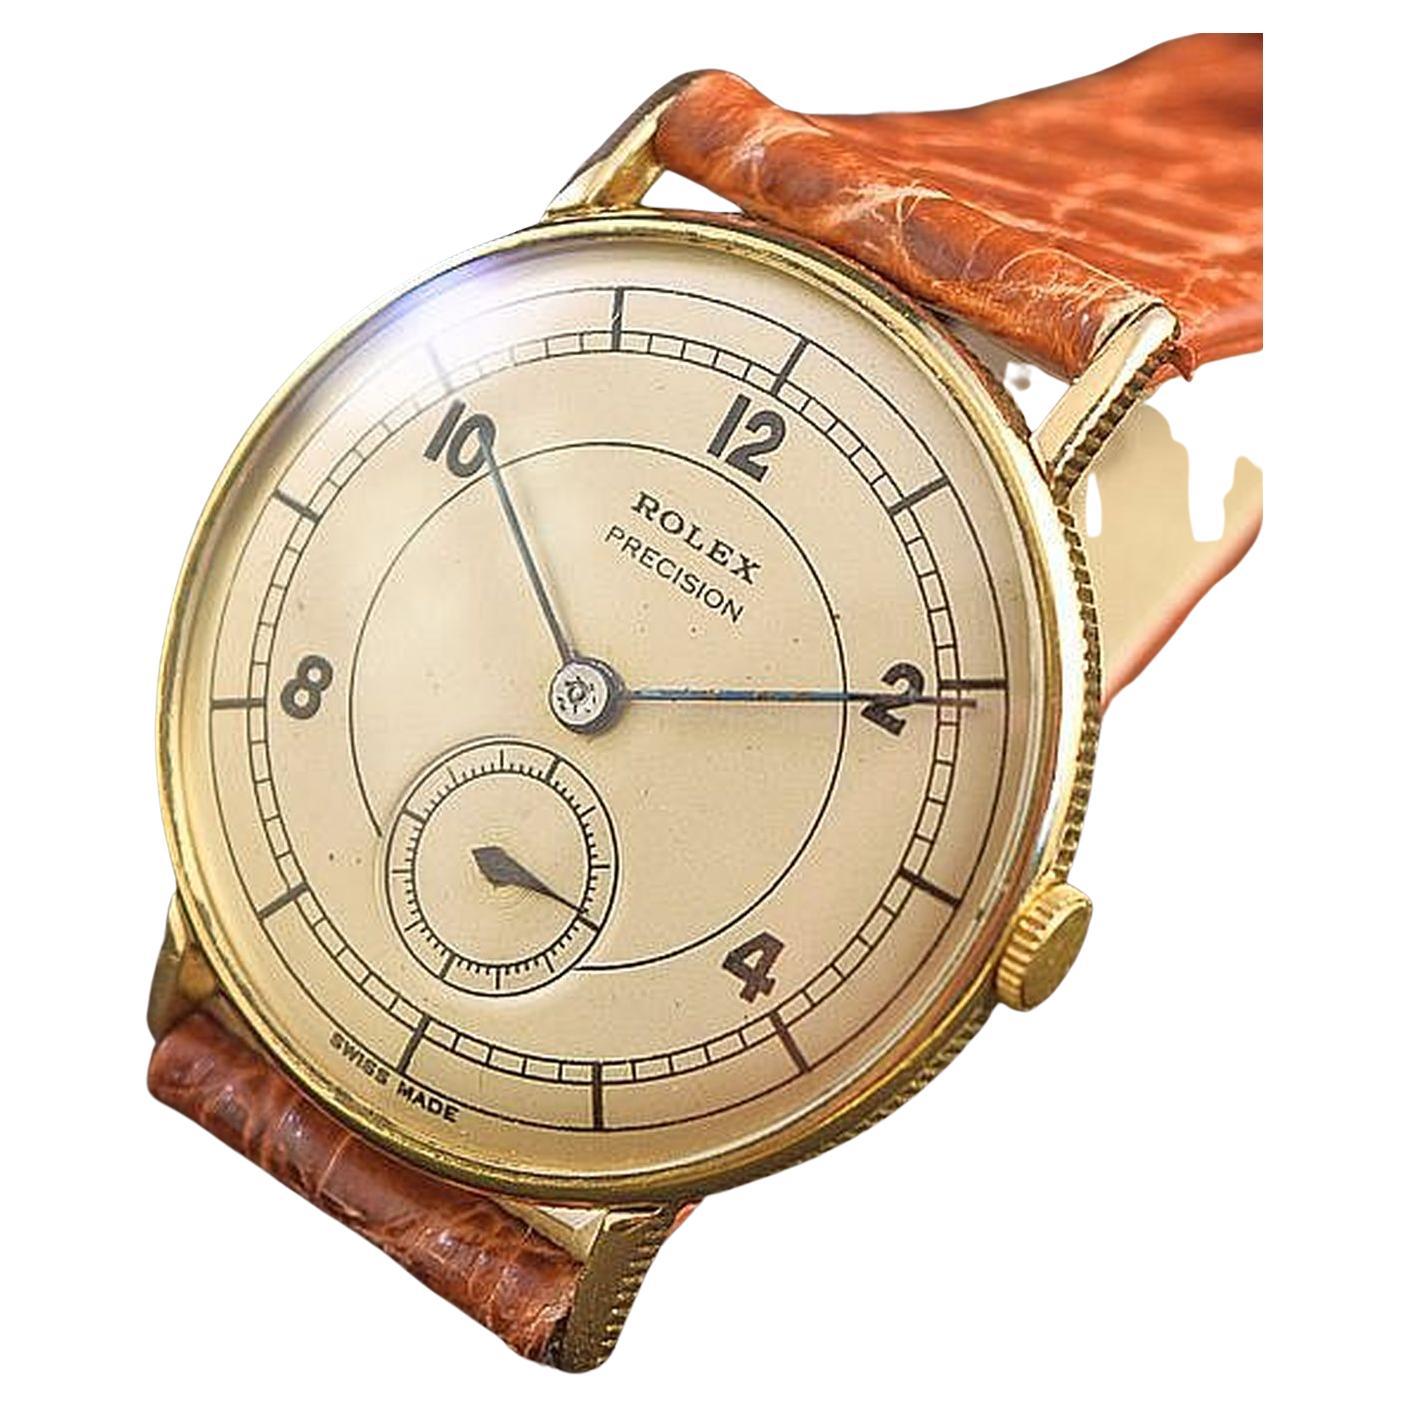  Rolex Precision Ref 1923 Rare Coin edge Vintage Watch